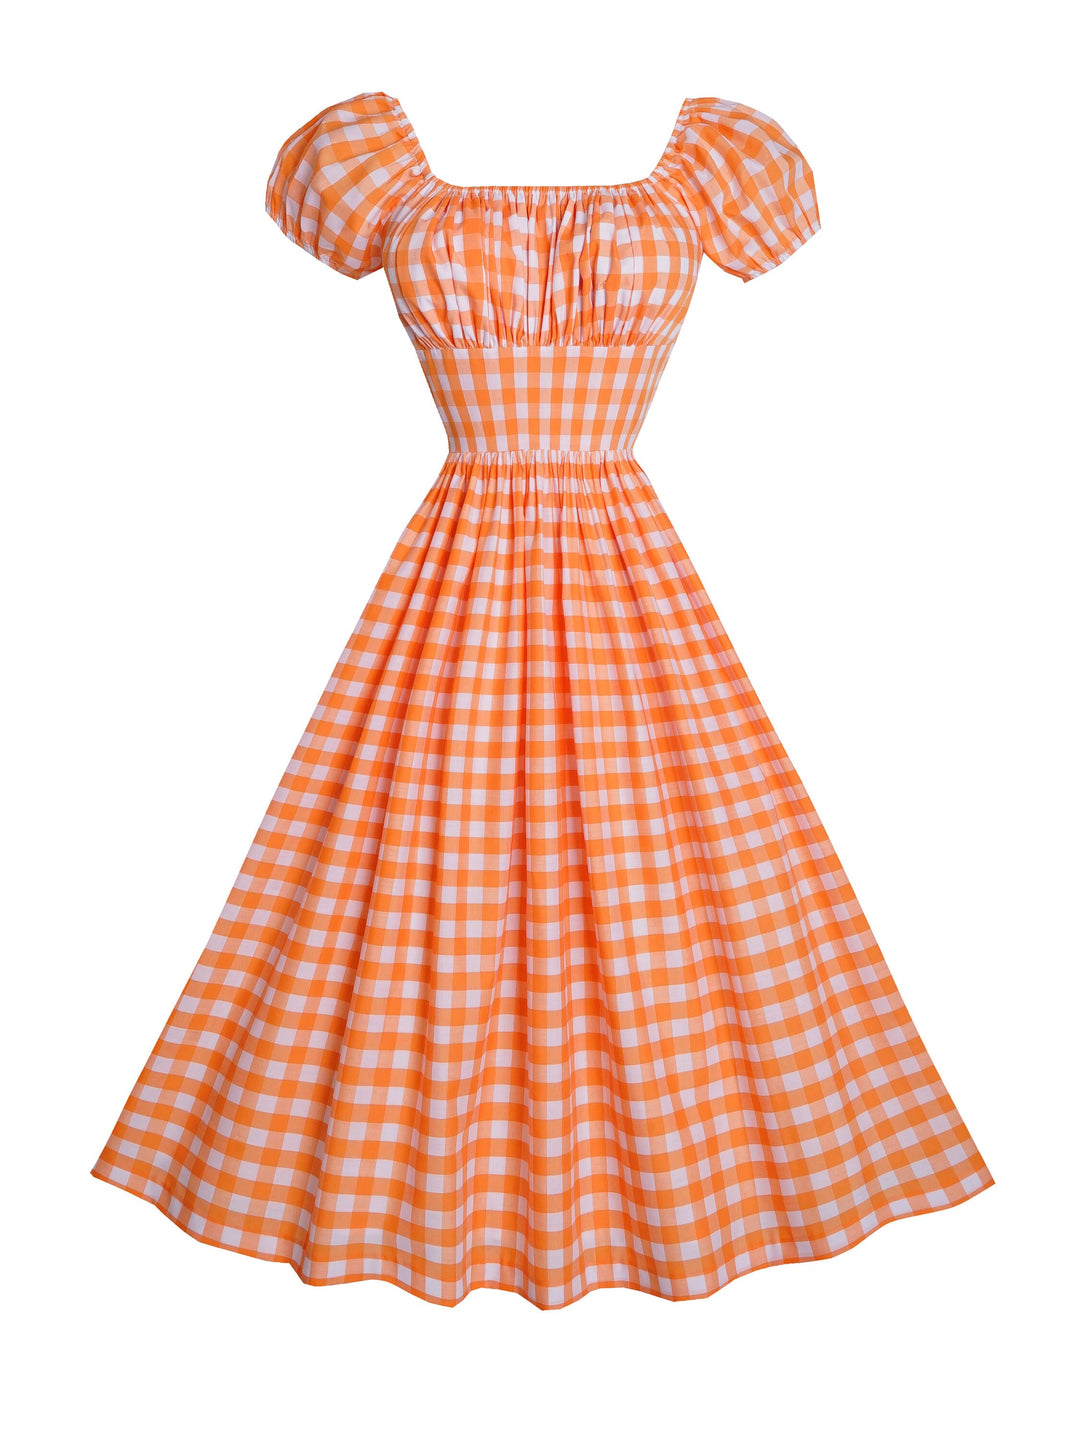 MTO - Loretta Dress Orange Gingham - Large Checks